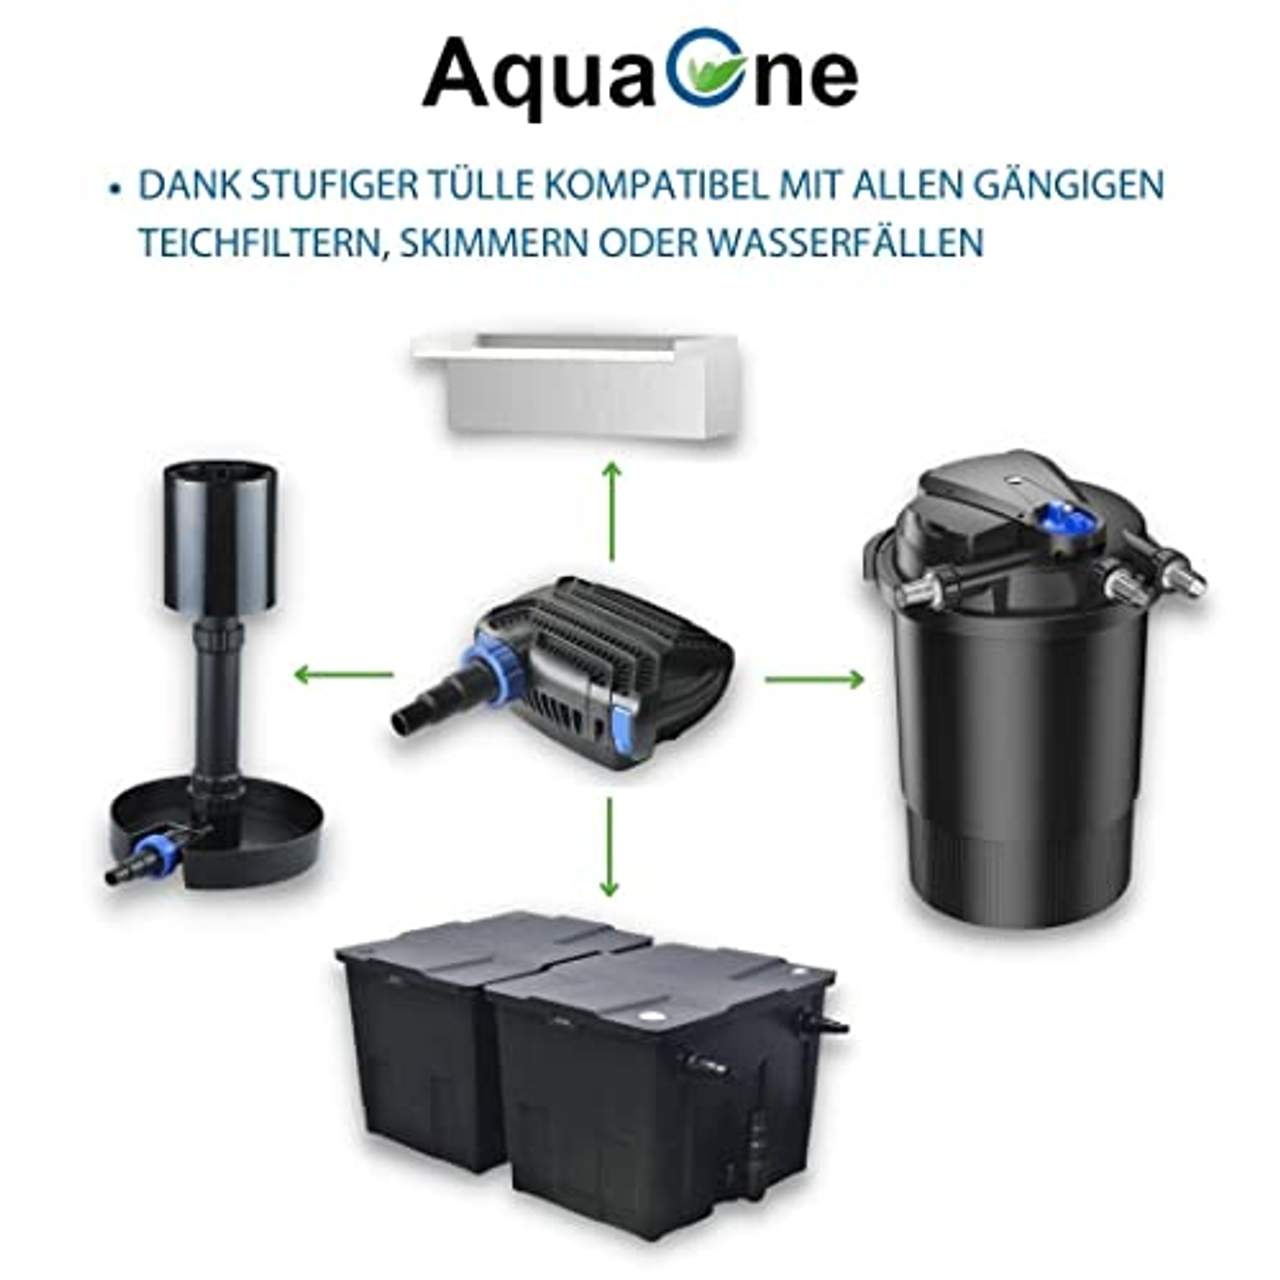 AquaOne Eco Teichpumpe CTF-B 3800 20 Watt 3600l /h I Hochwertige Teichpumpe